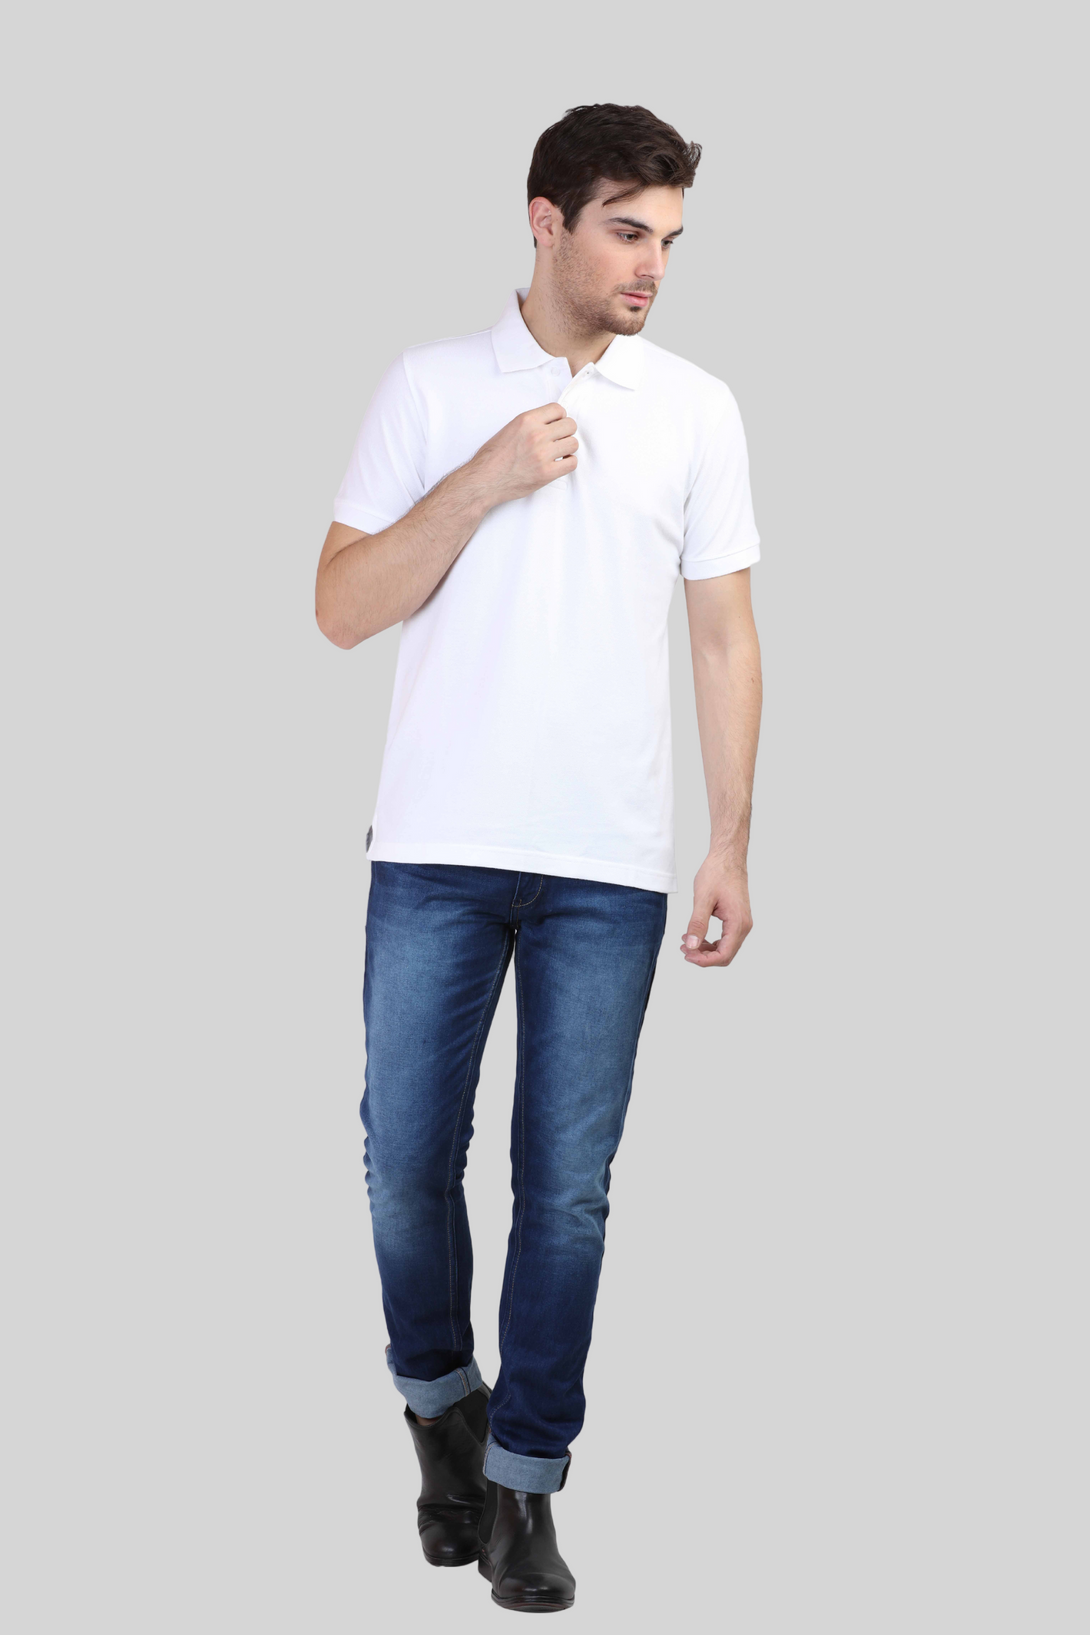 White Polo T-Shirt For Men - WowWaves - 7